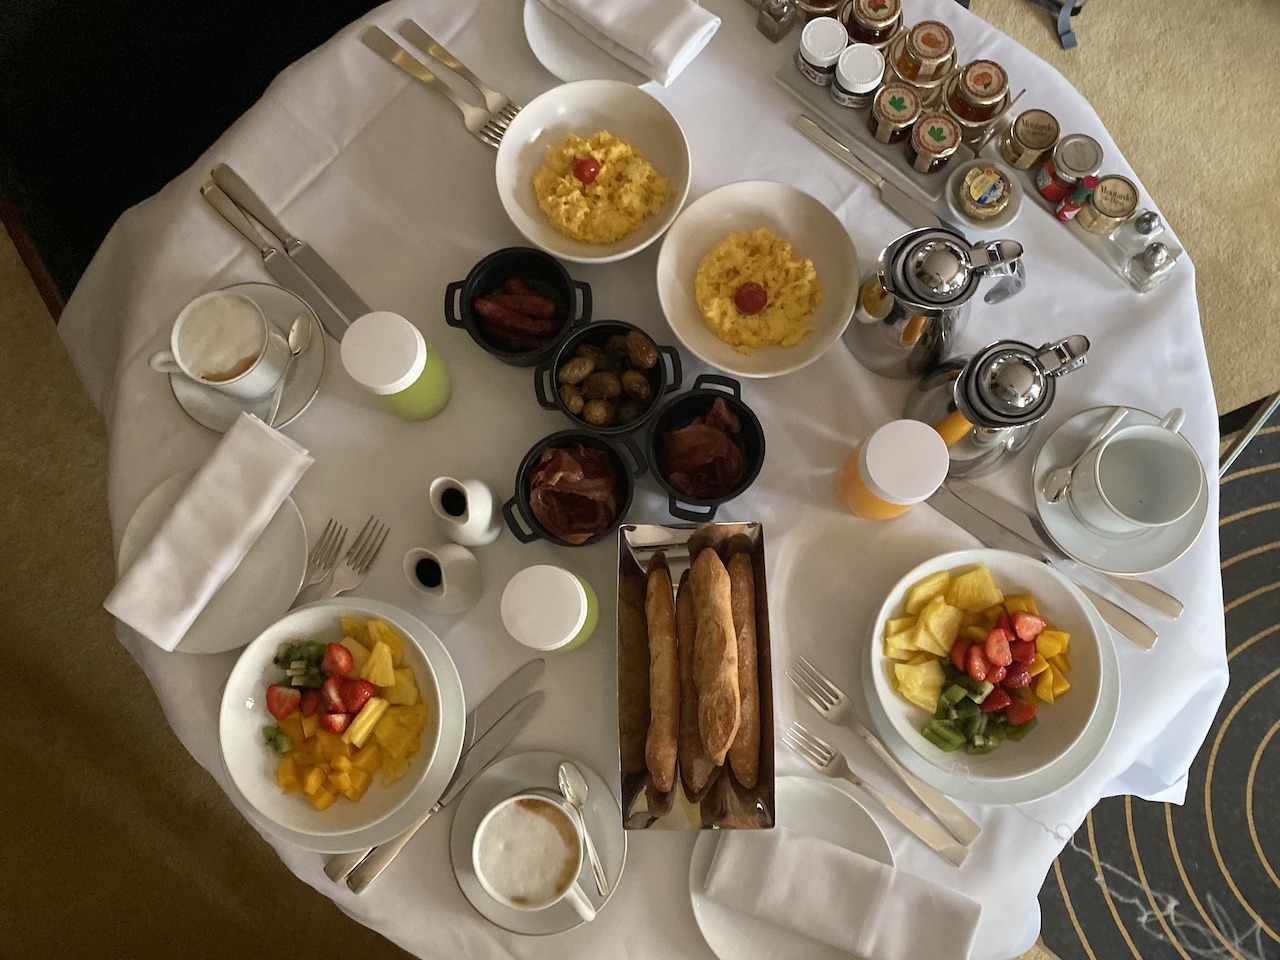 Hyatt Globalist room service breakfast